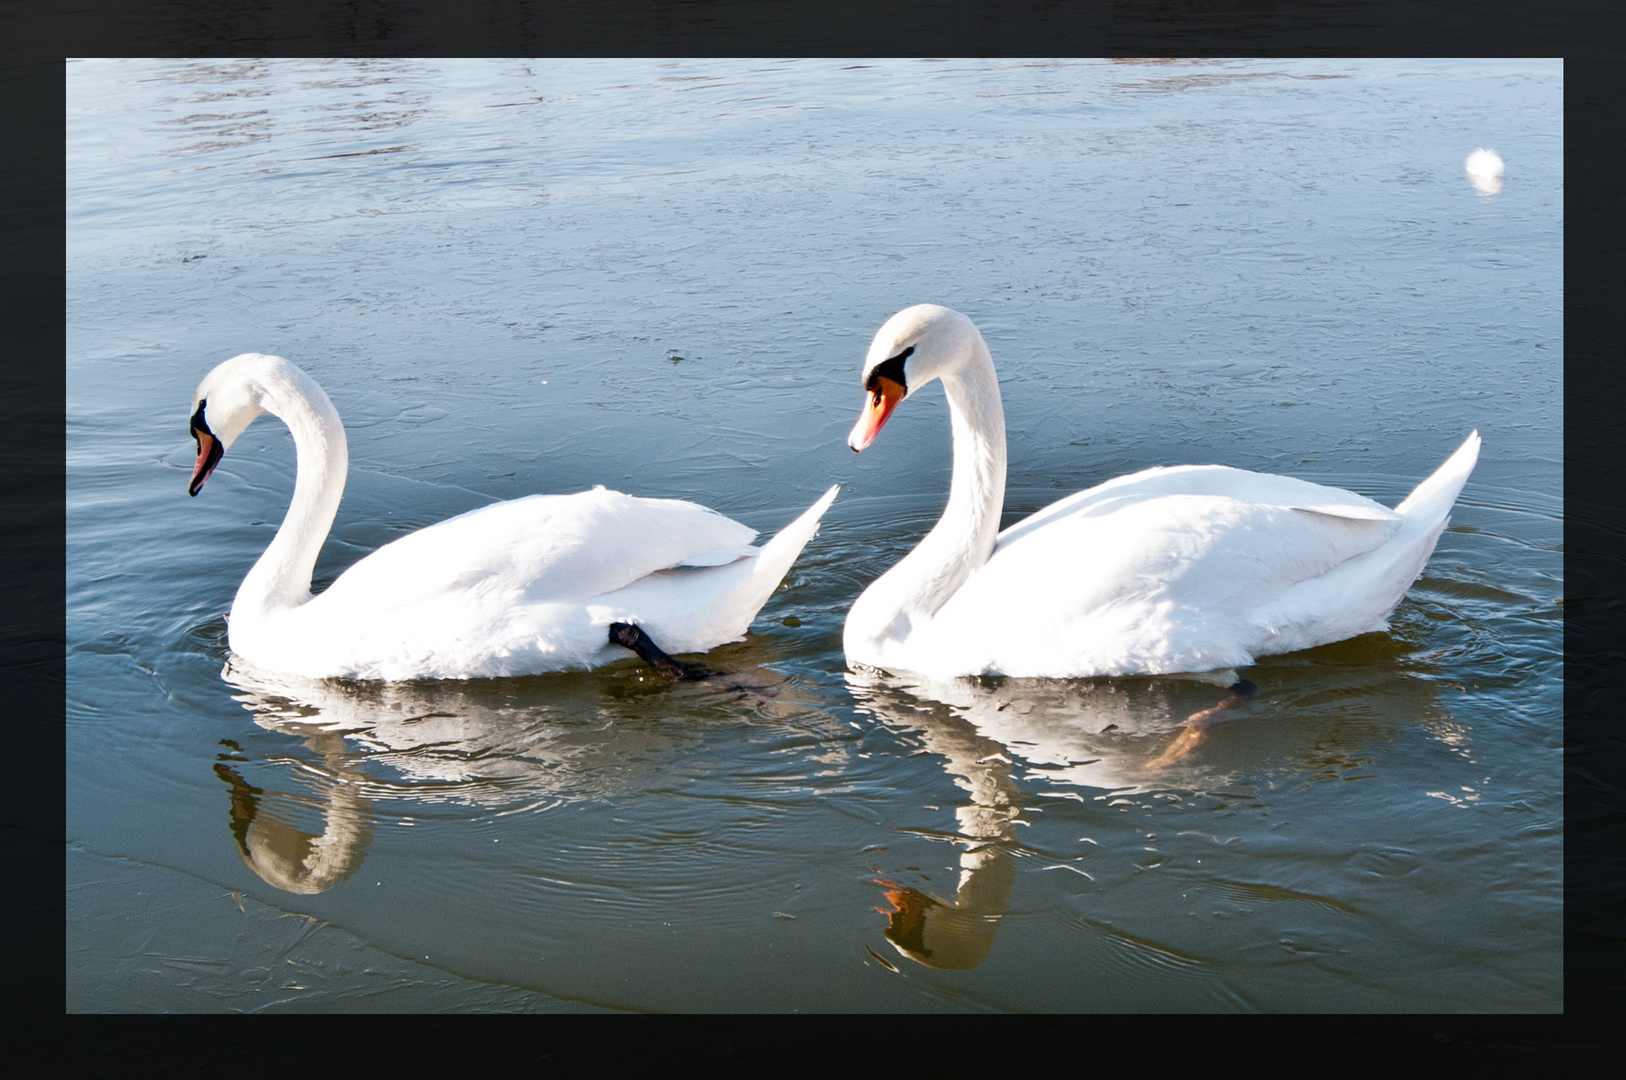 swan love on ice